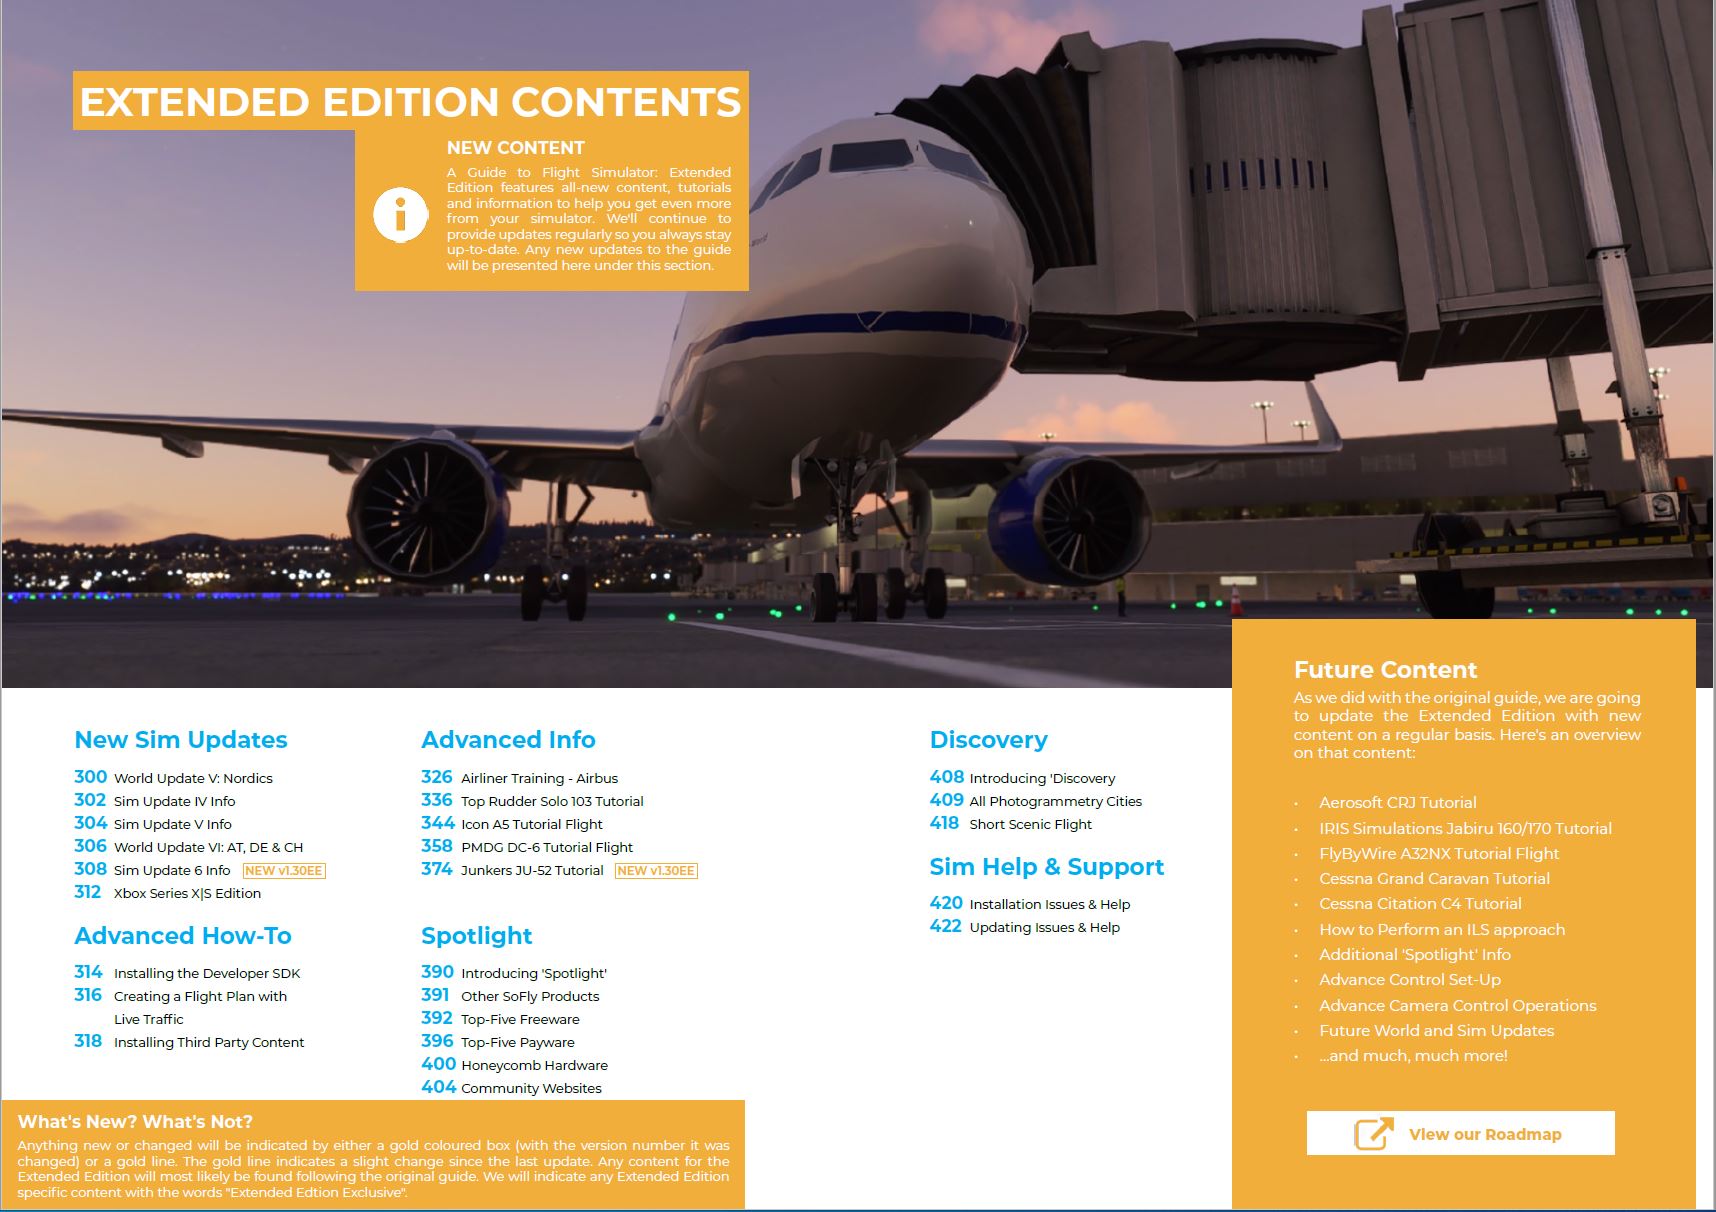 Microsoft Flight Simulator 2020 beginner guide: Tips to help you start  flying solo